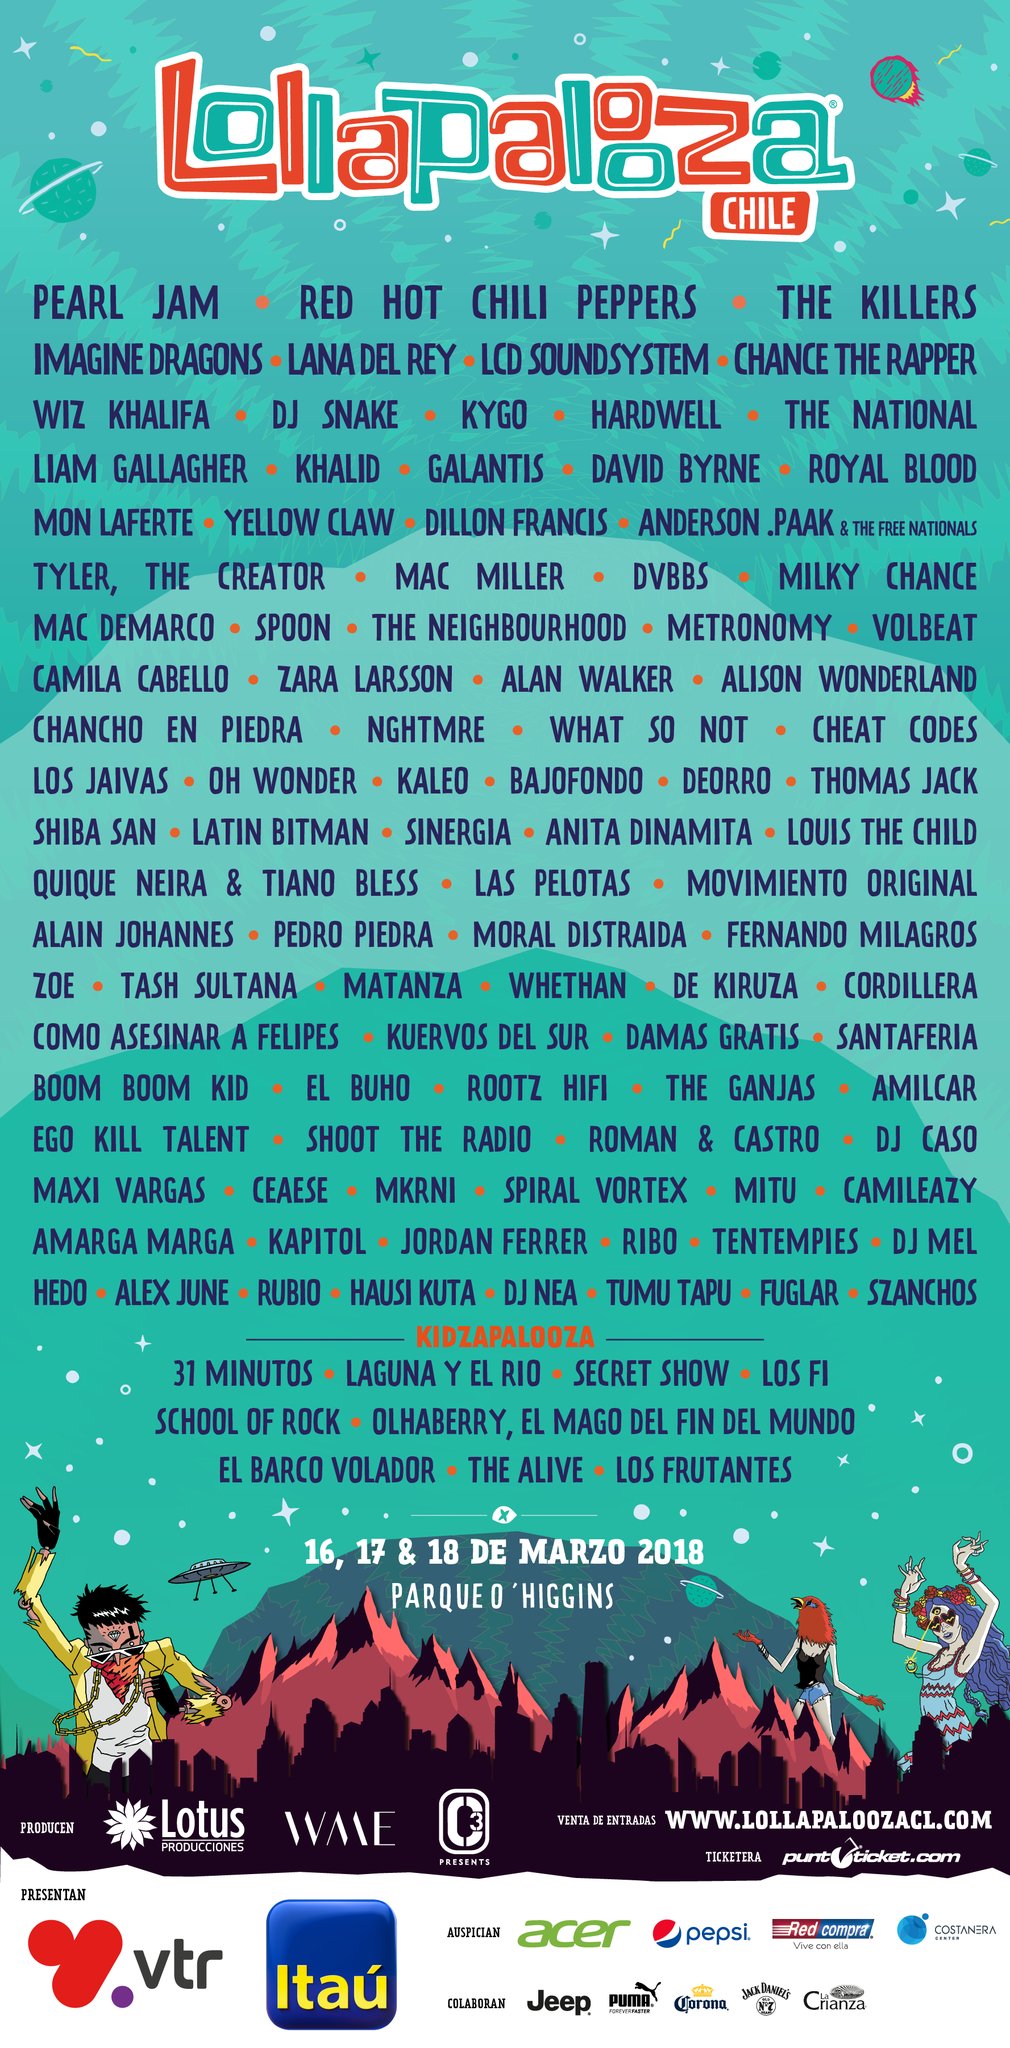 Lollapalooza 2018 Chile lineup. Photo provided.